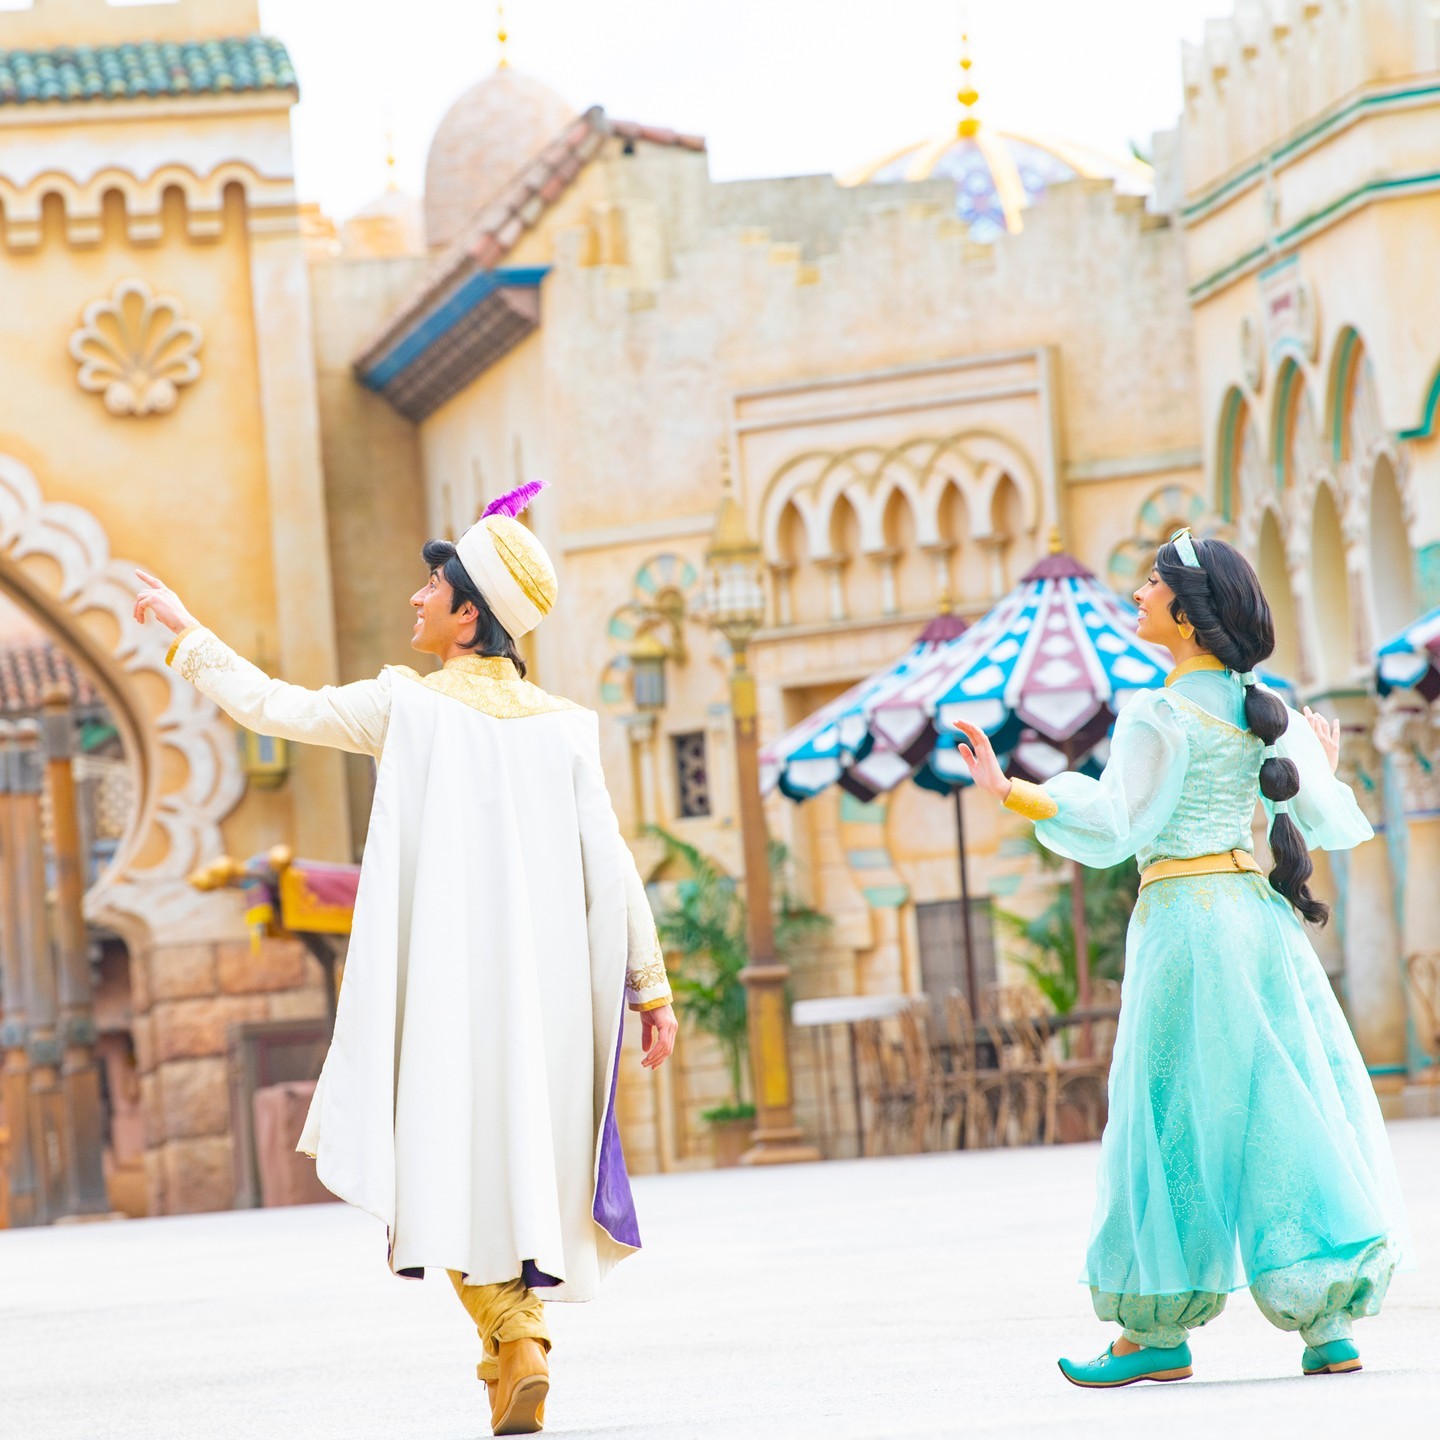 Aladdin,what did you find?
2人なら、どこでも素敵な発見が♡
#jasmine #aladdin #arabiancoast...的圖像